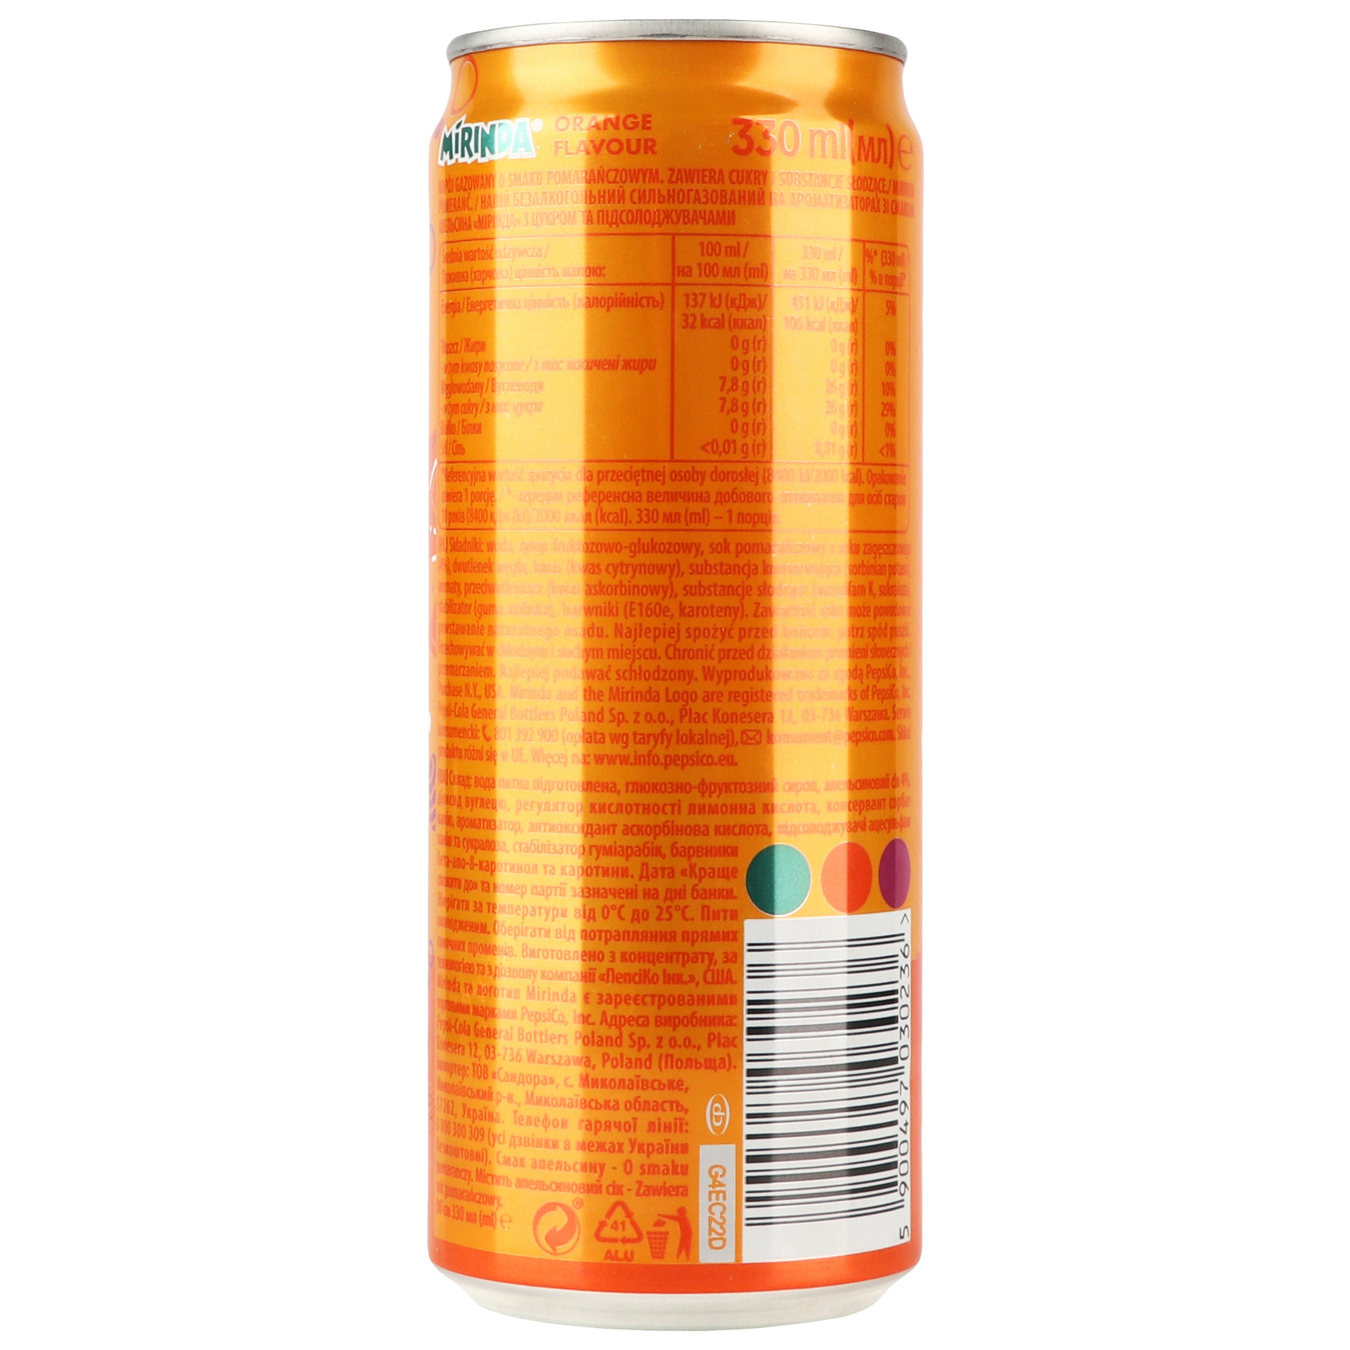 Carbonated drink Mirinda Orange 330ml 3